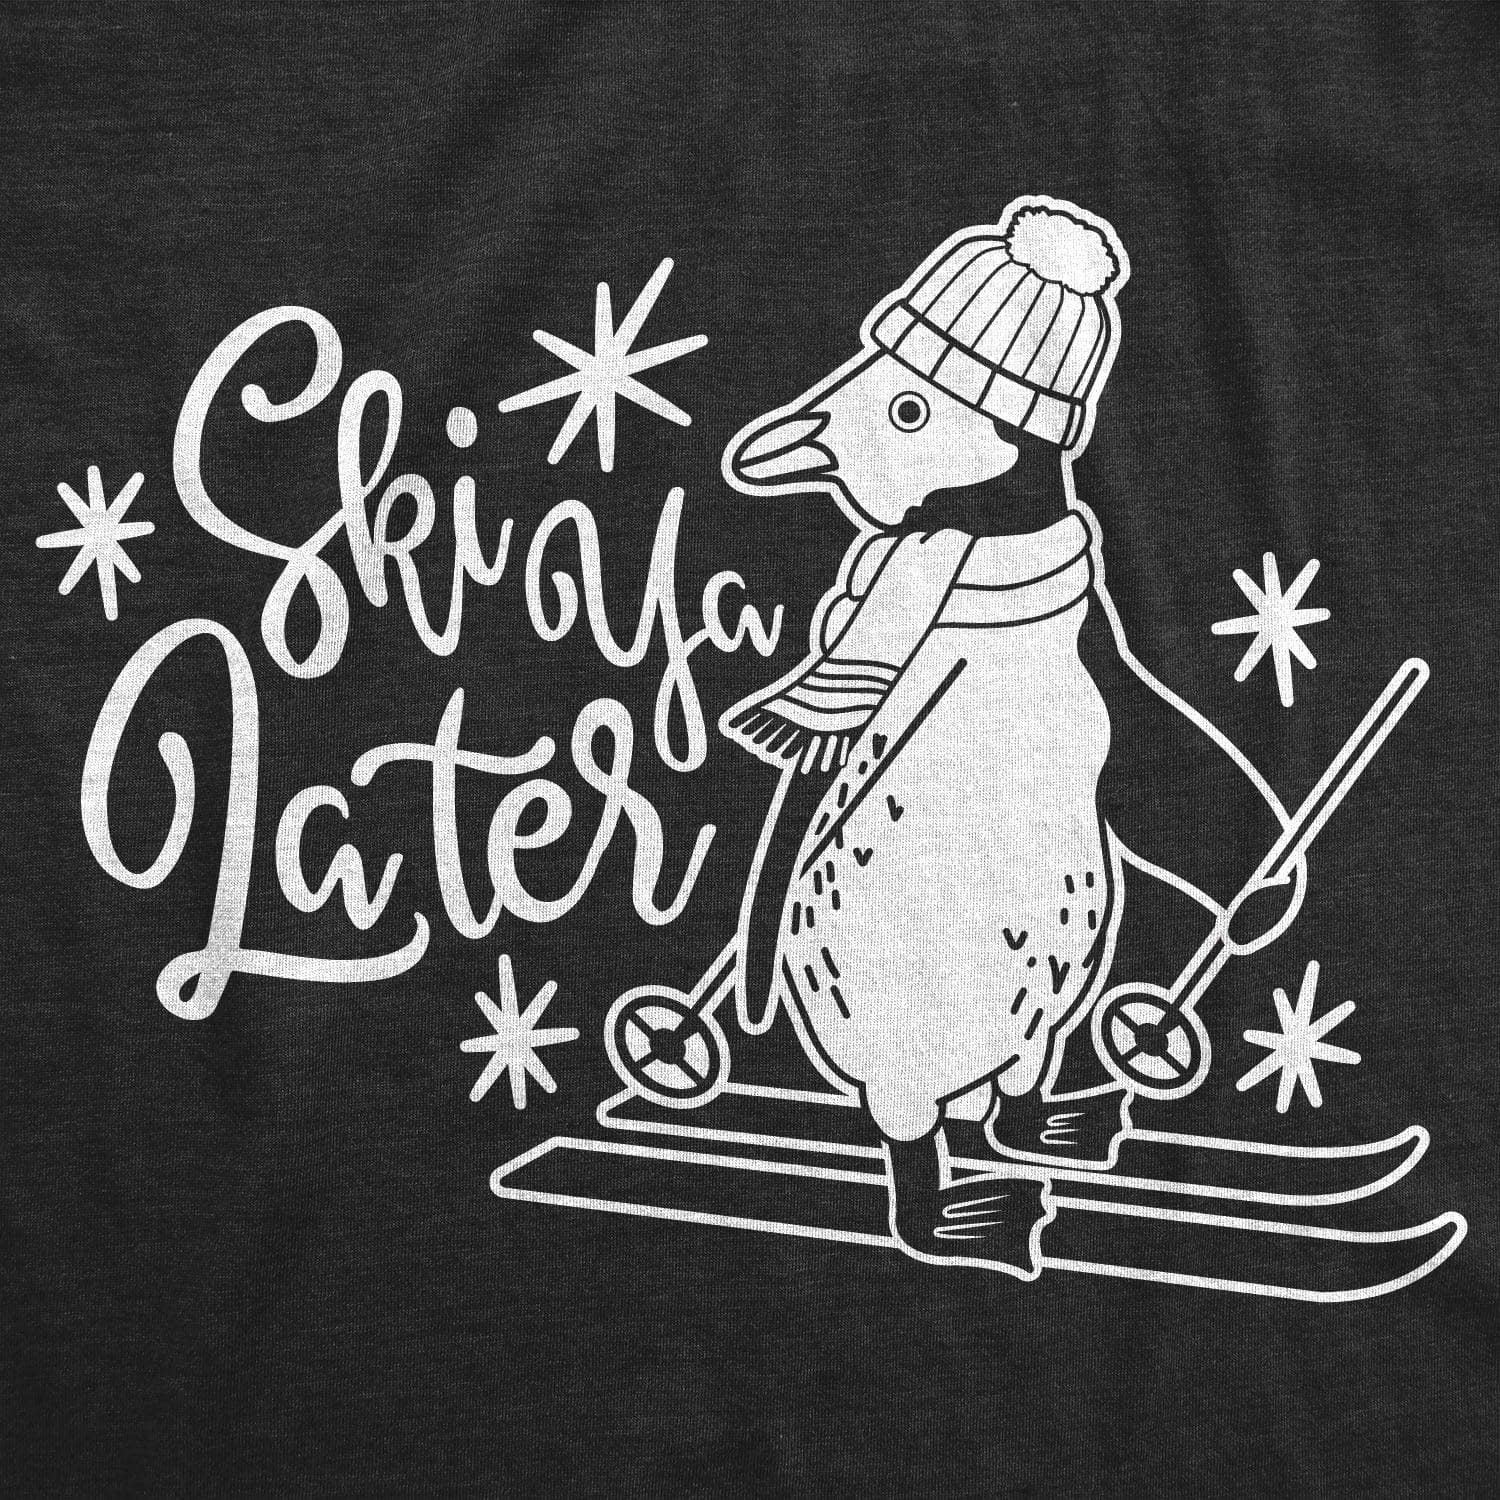 Ski Ya Later Men's Tshirt  -  Crazy Dog T-Shirts